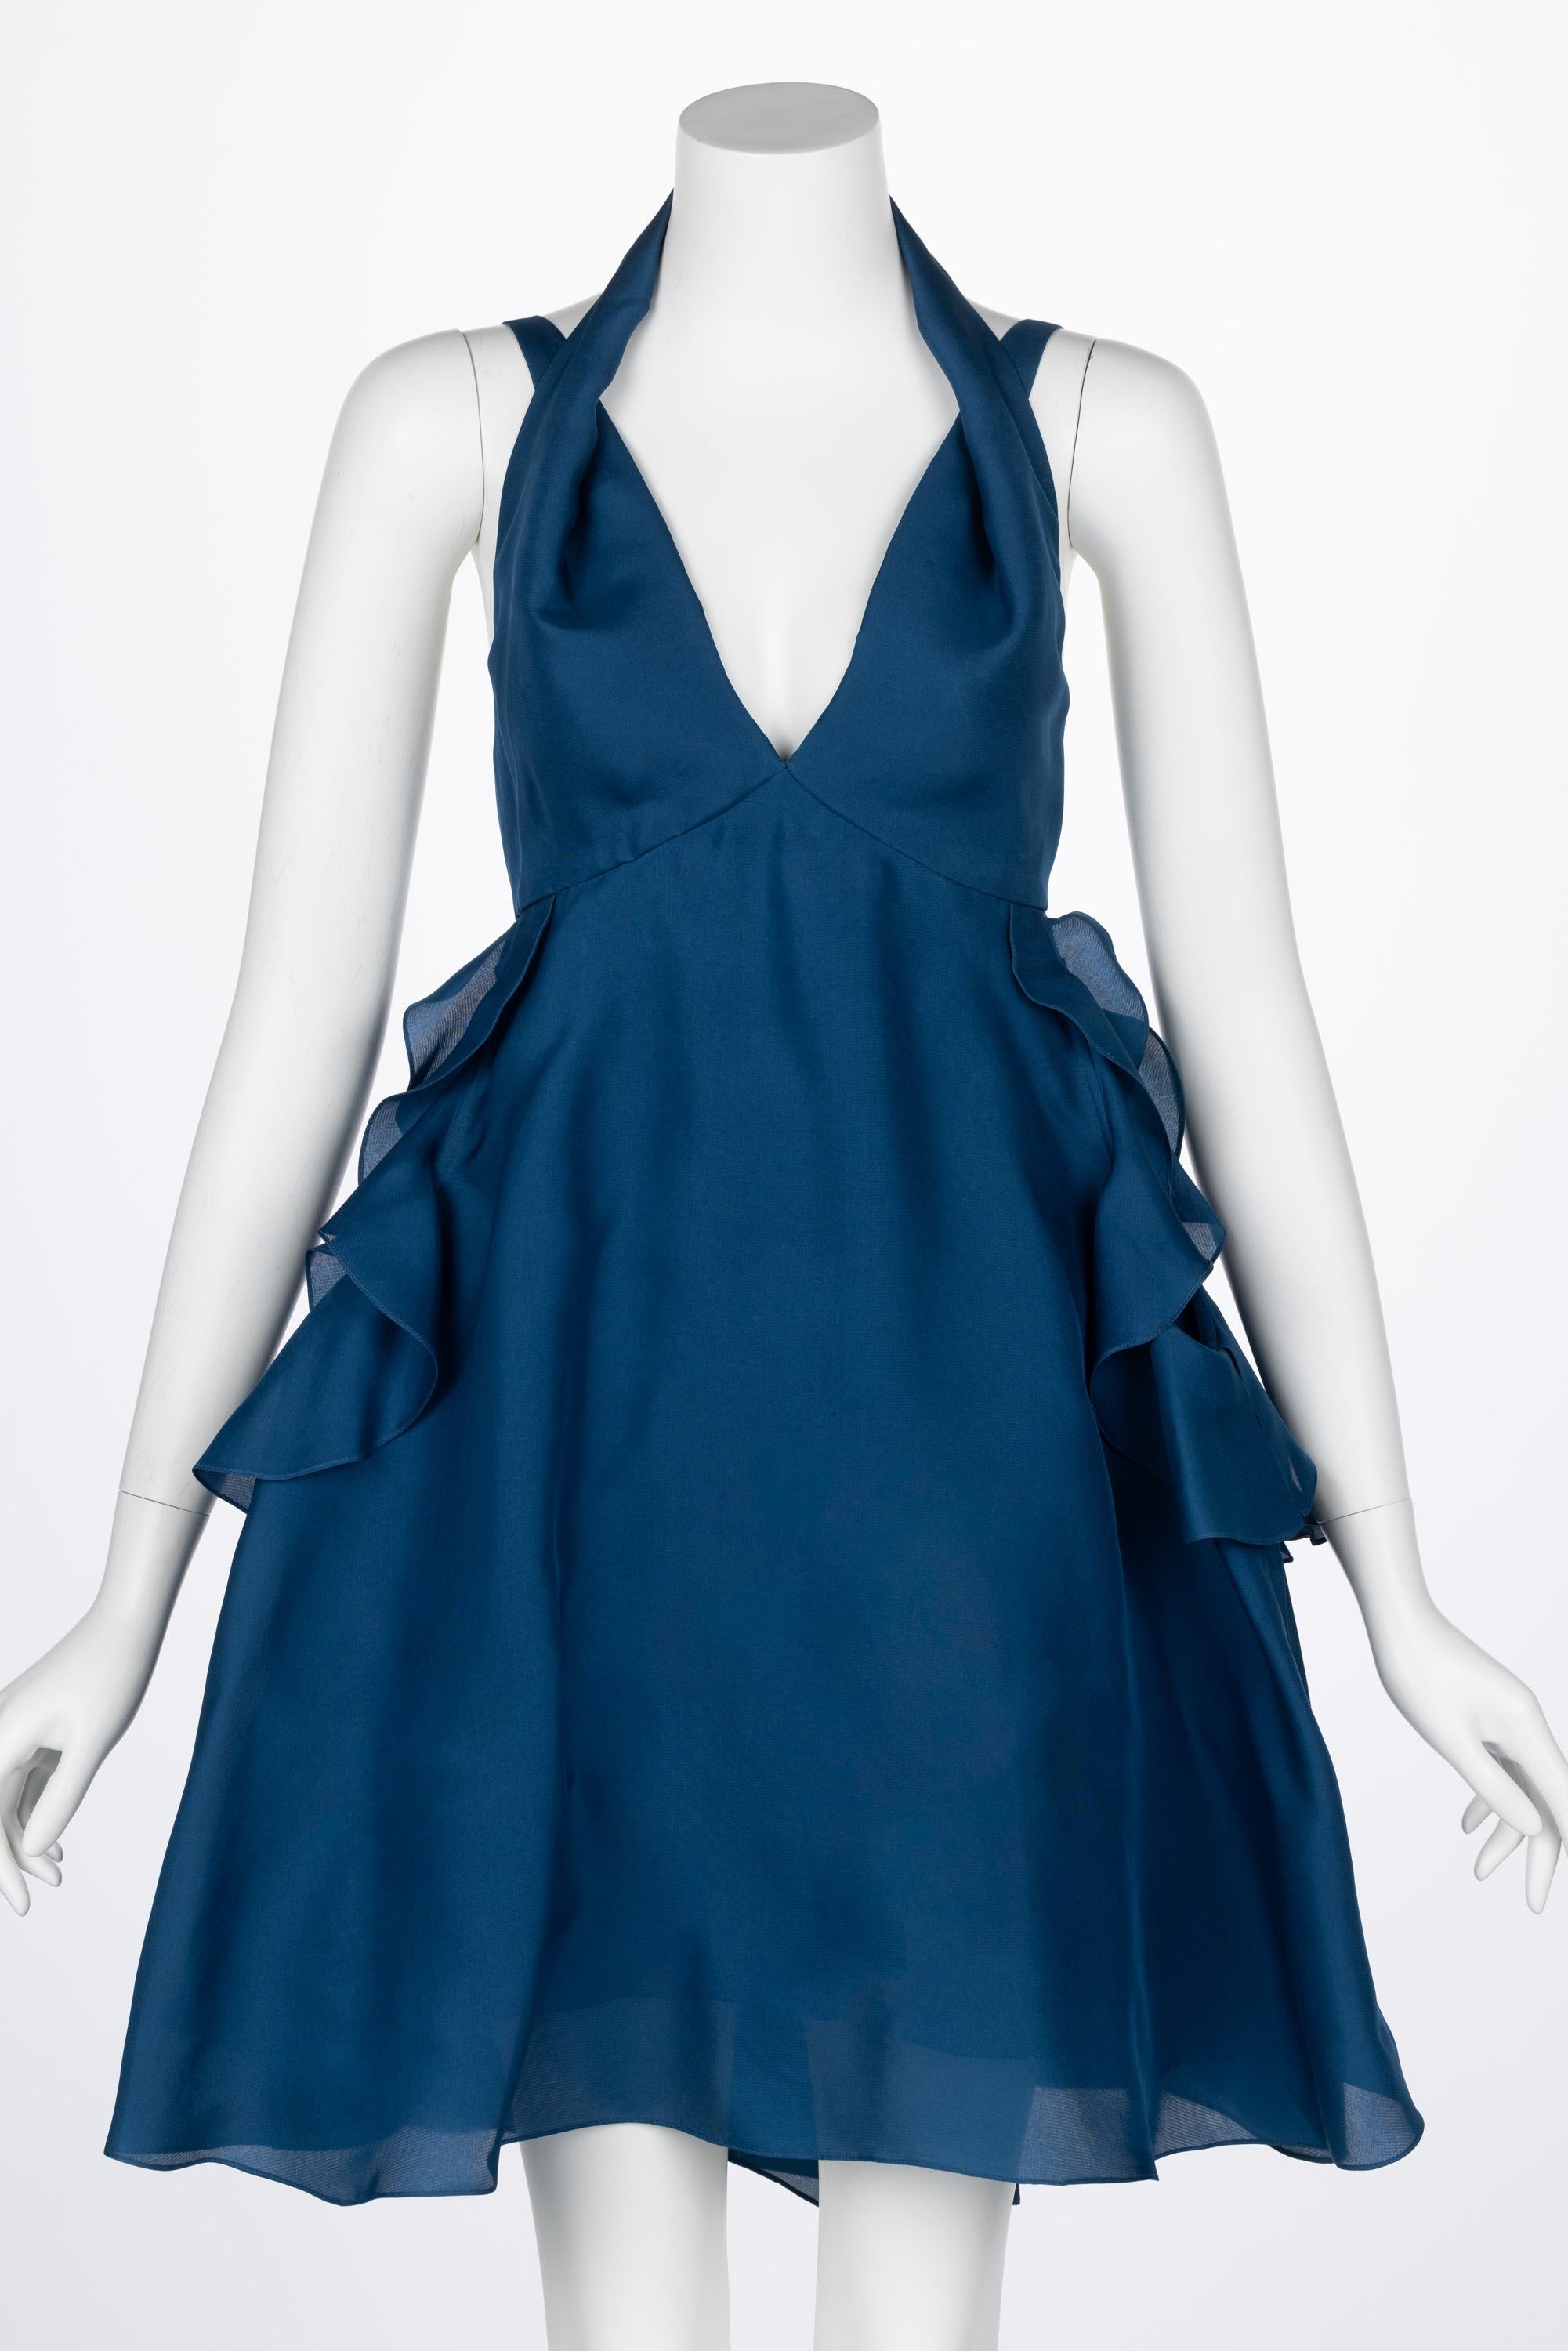 Women's Yves Saint Laurent Blue Silk Organza Spring 2012 Runway Dress For Sale